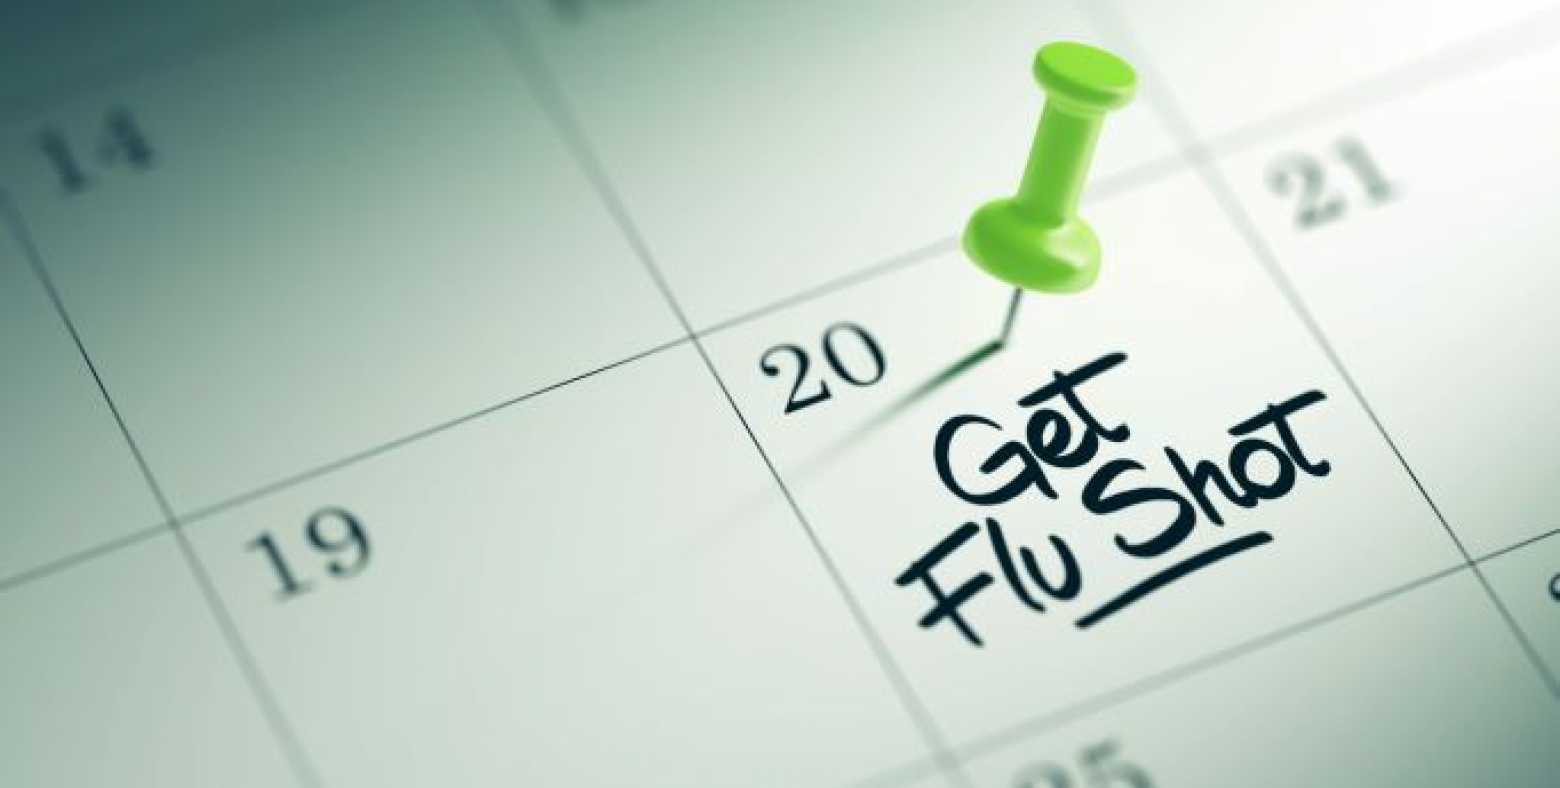 Calendar with flu shot note 